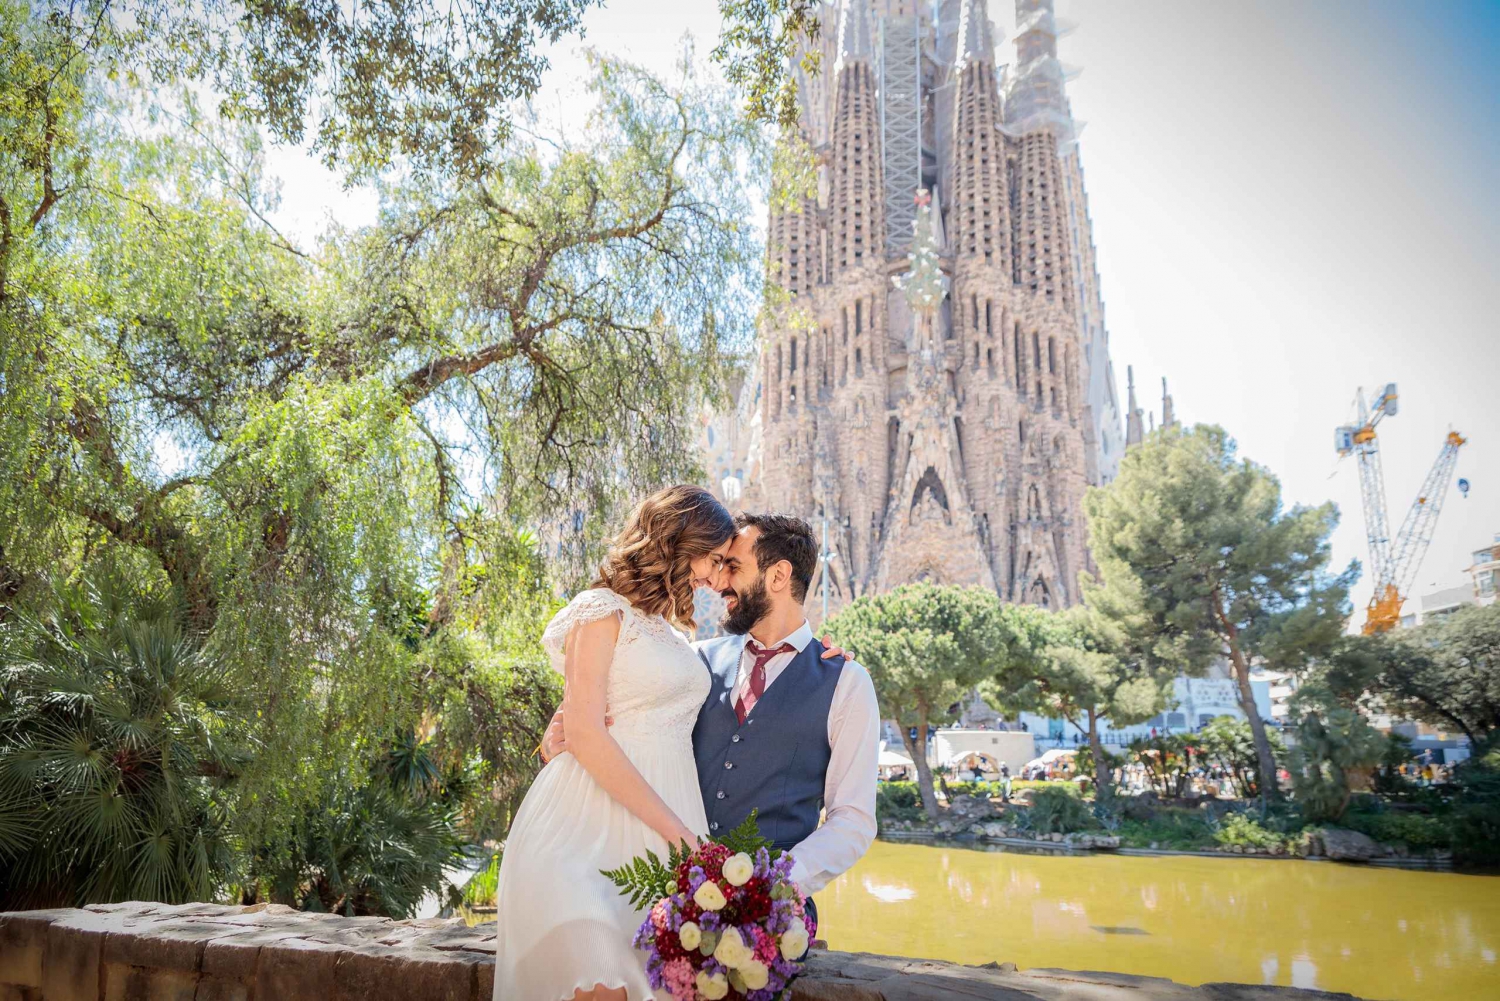 Barcelona: Private Photoshoot at Sagrada Familia